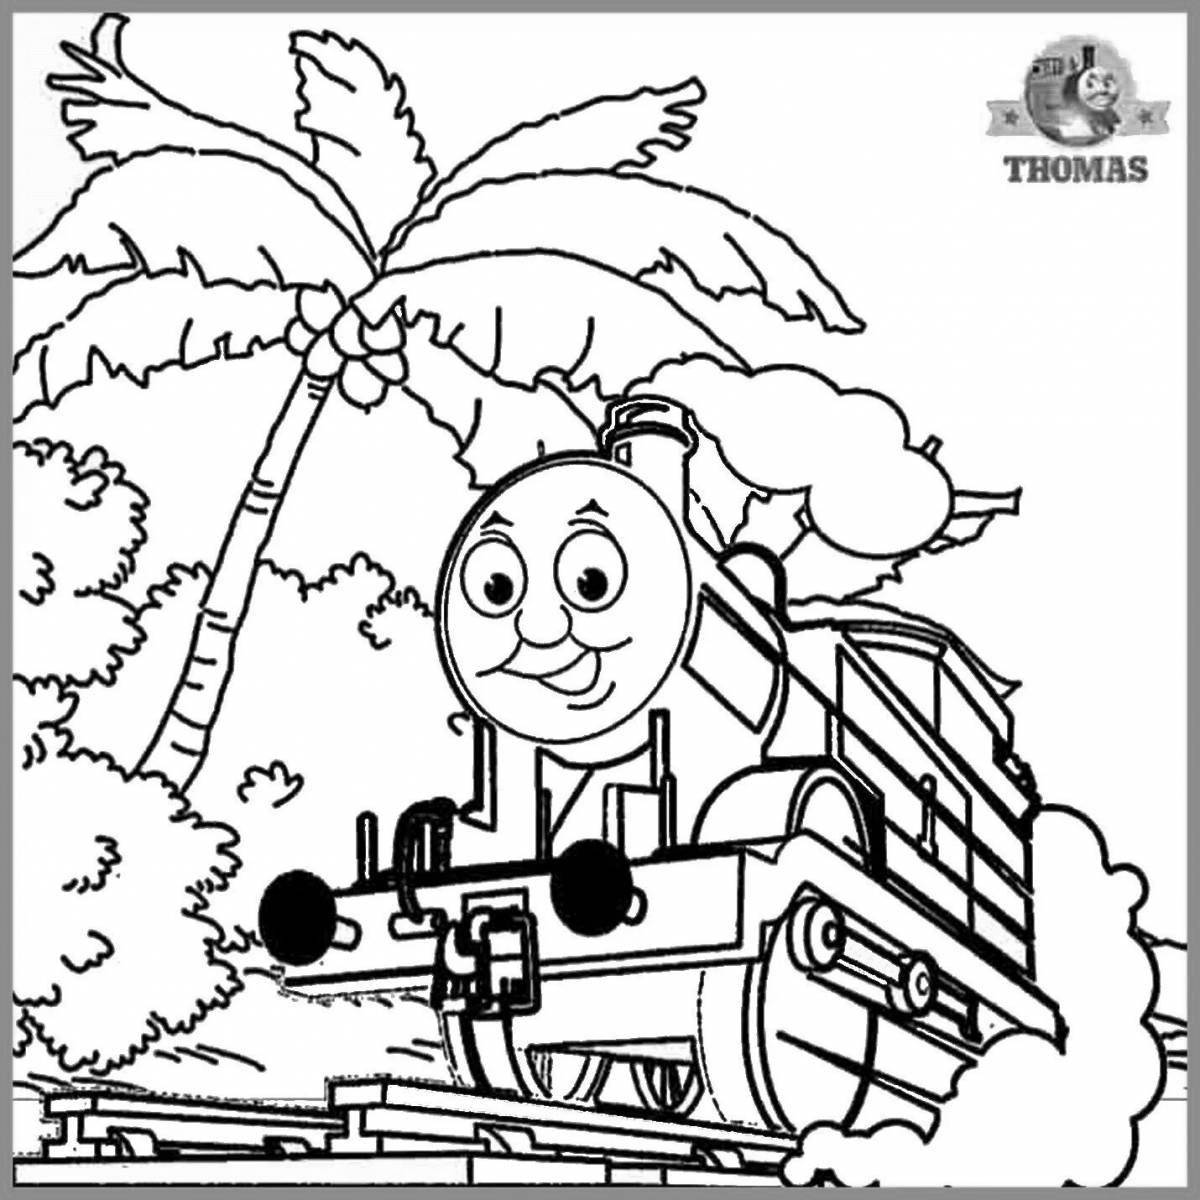 Thomas the Tank Engine fun coloring page